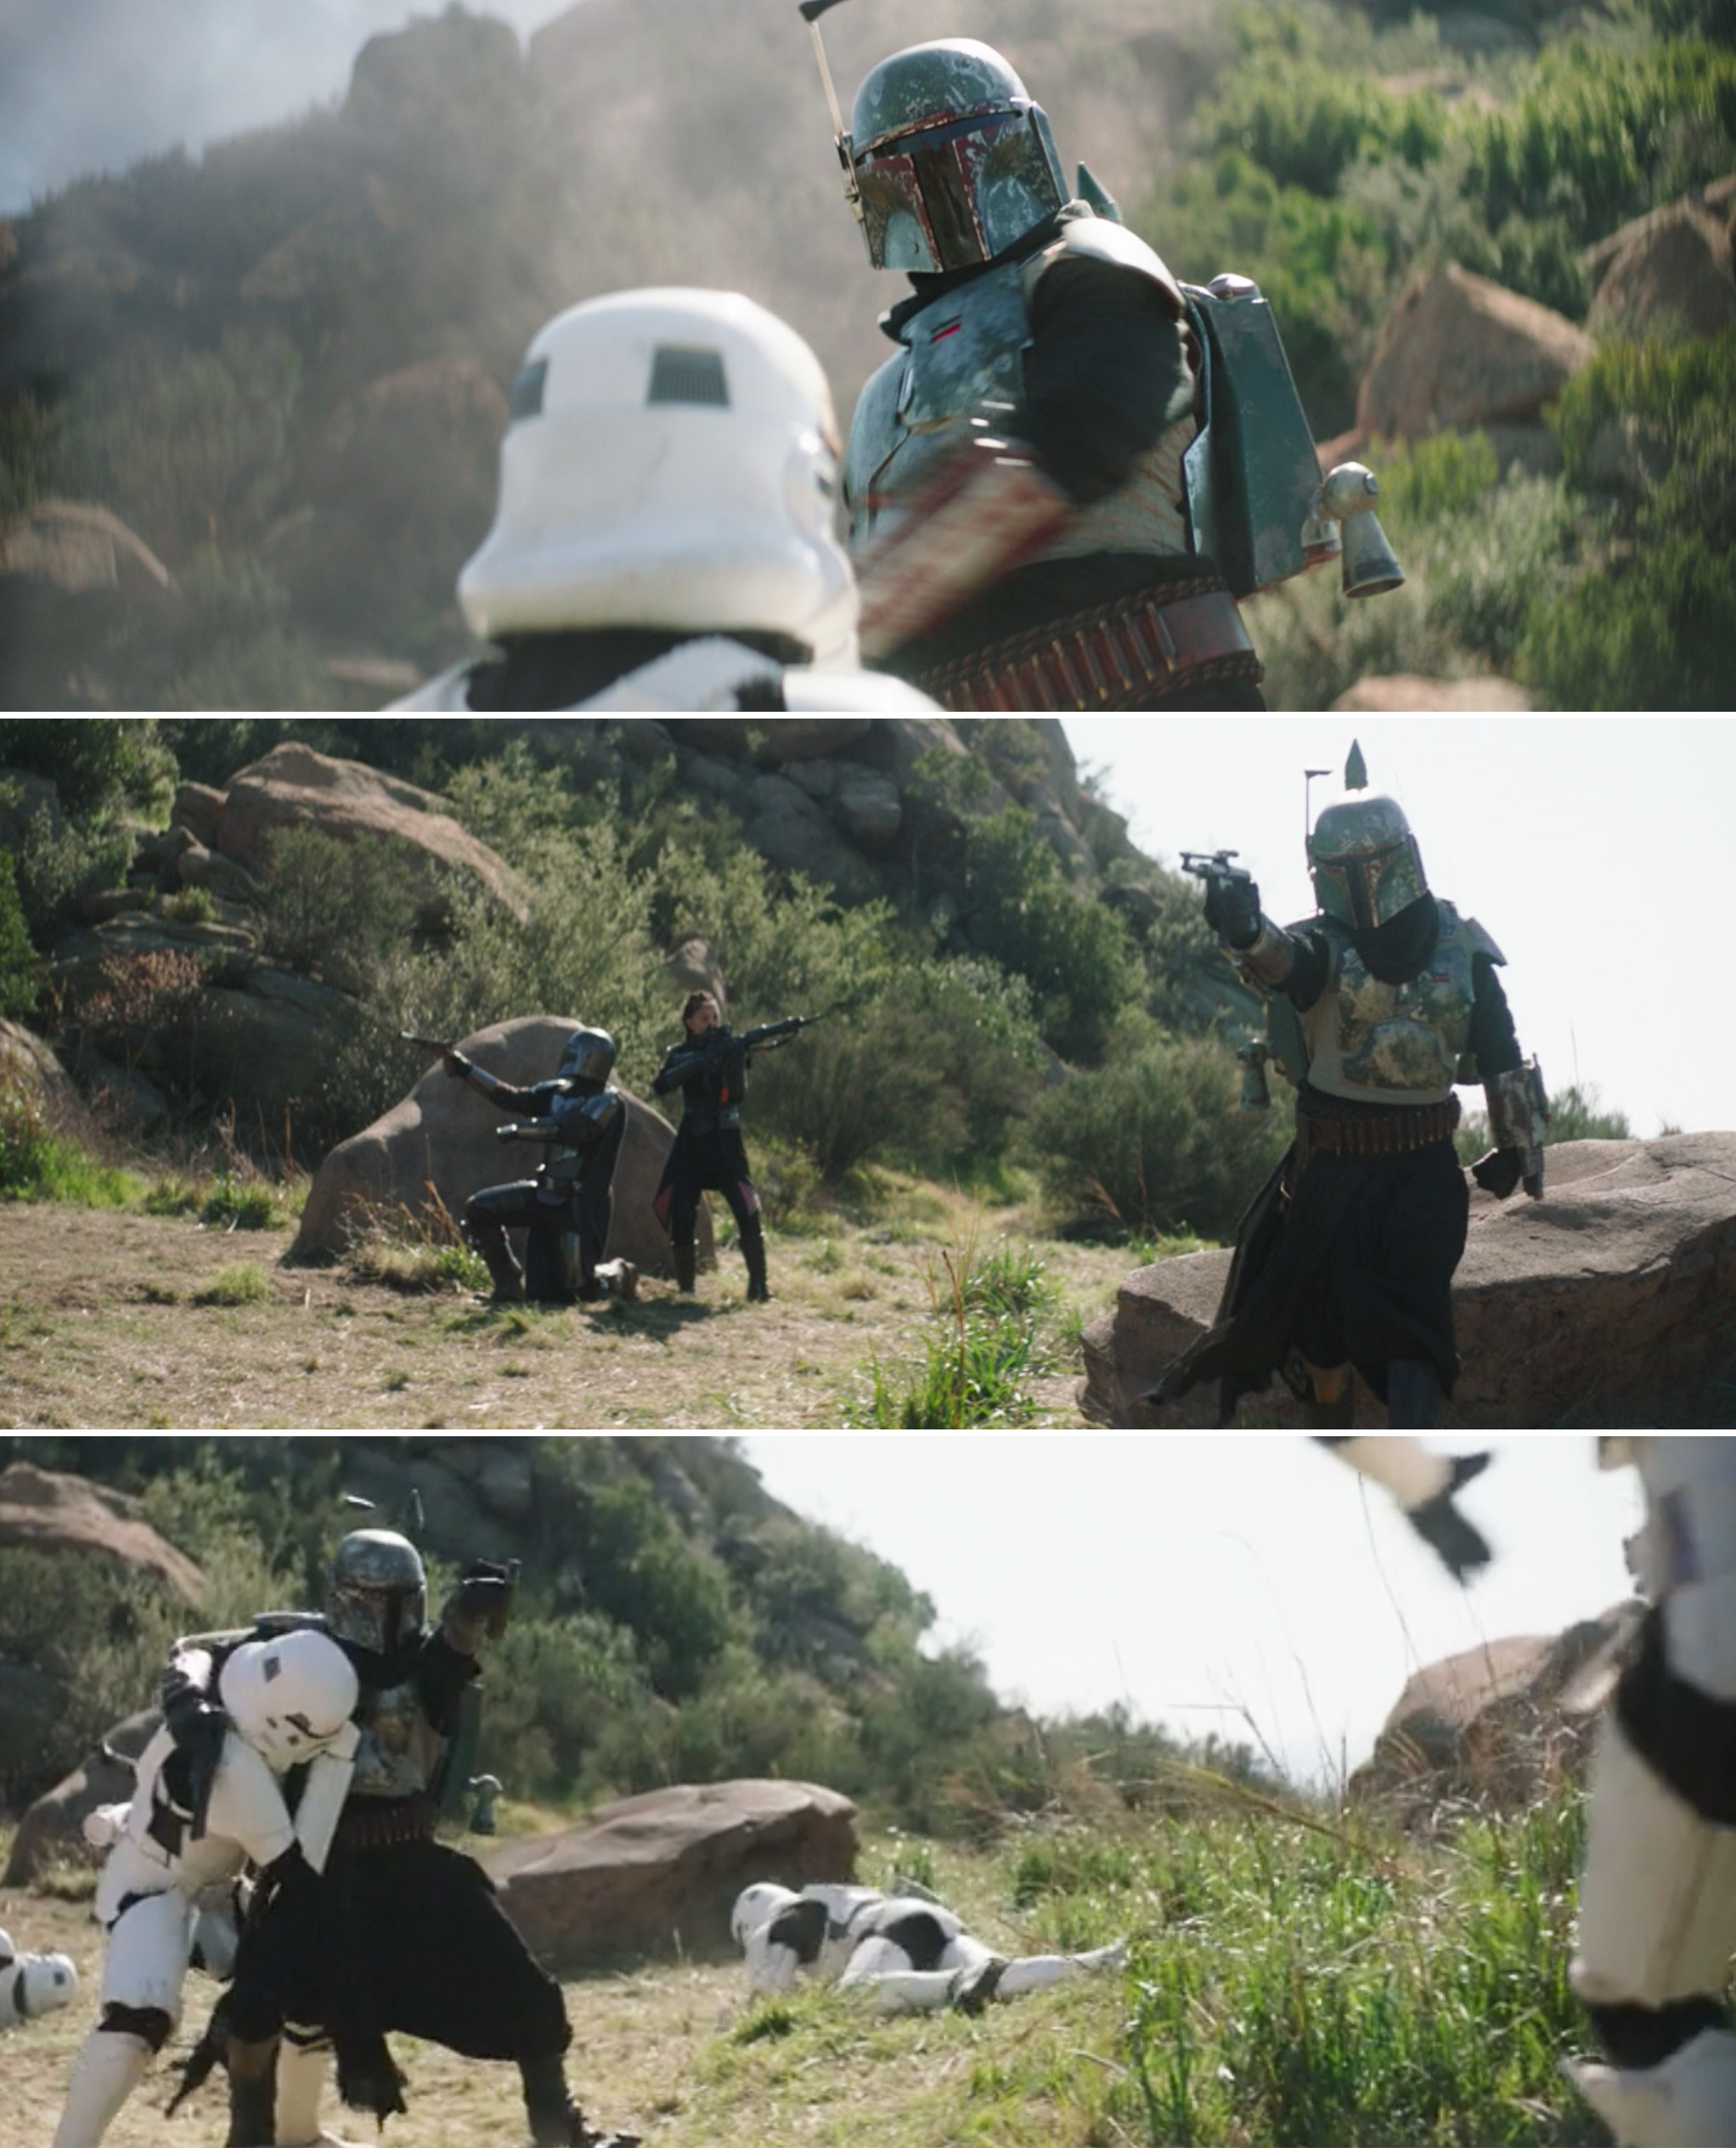 Boba Fett fighting several Stormtroopers